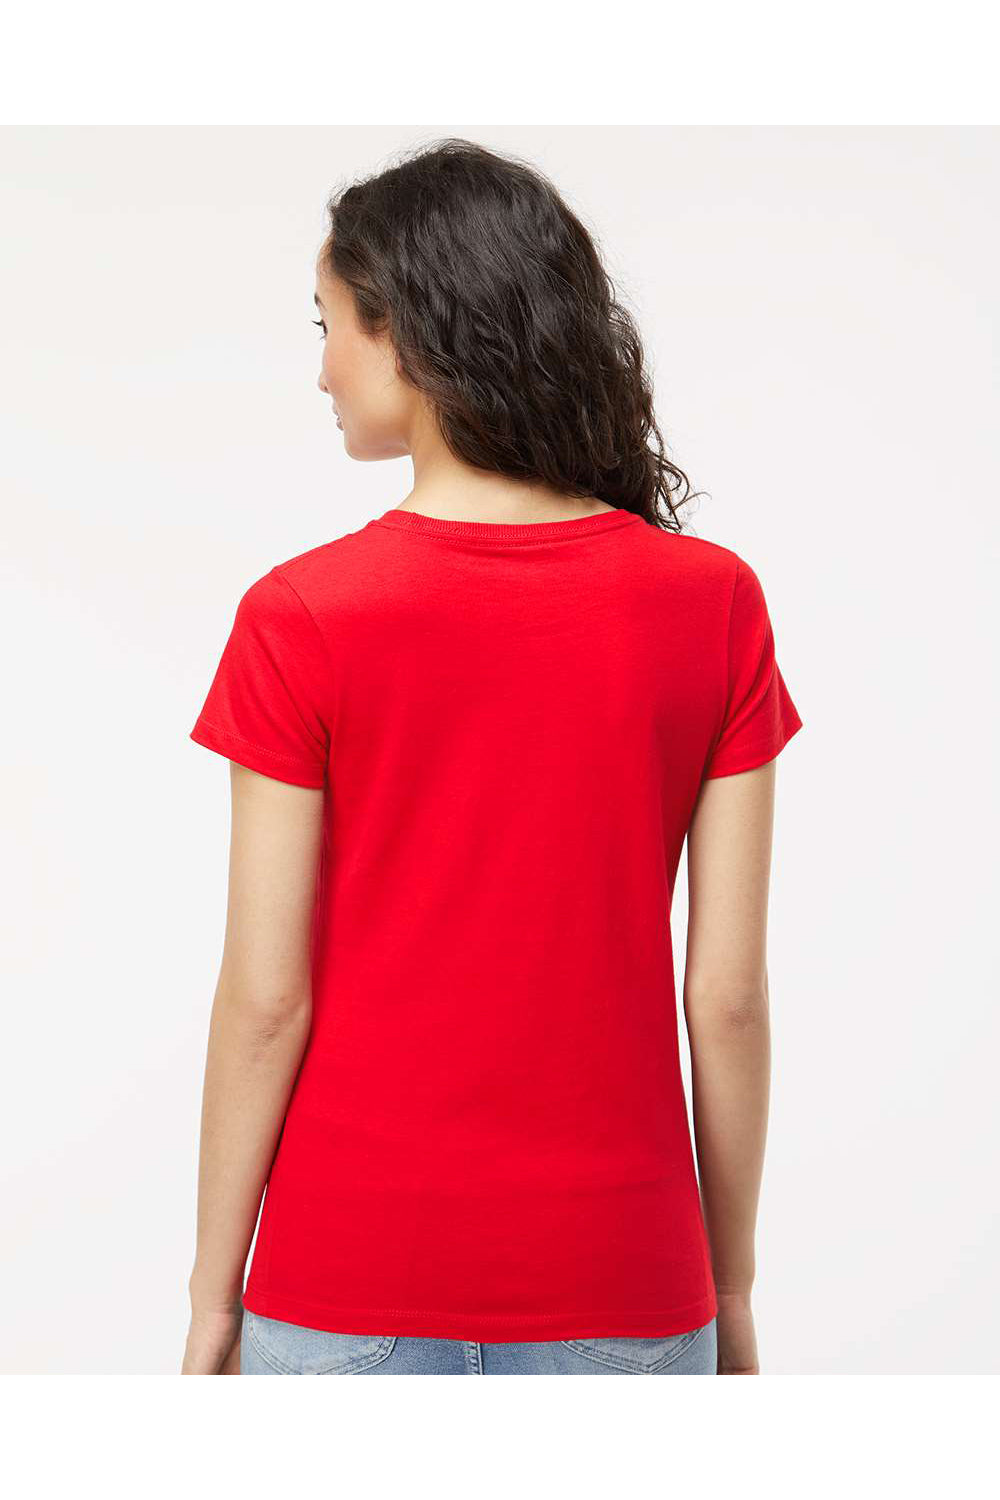 M&O 4810 Womens Gold Soft Touch Short Sleeve Crewneck T-Shirt Deep Red Model Back